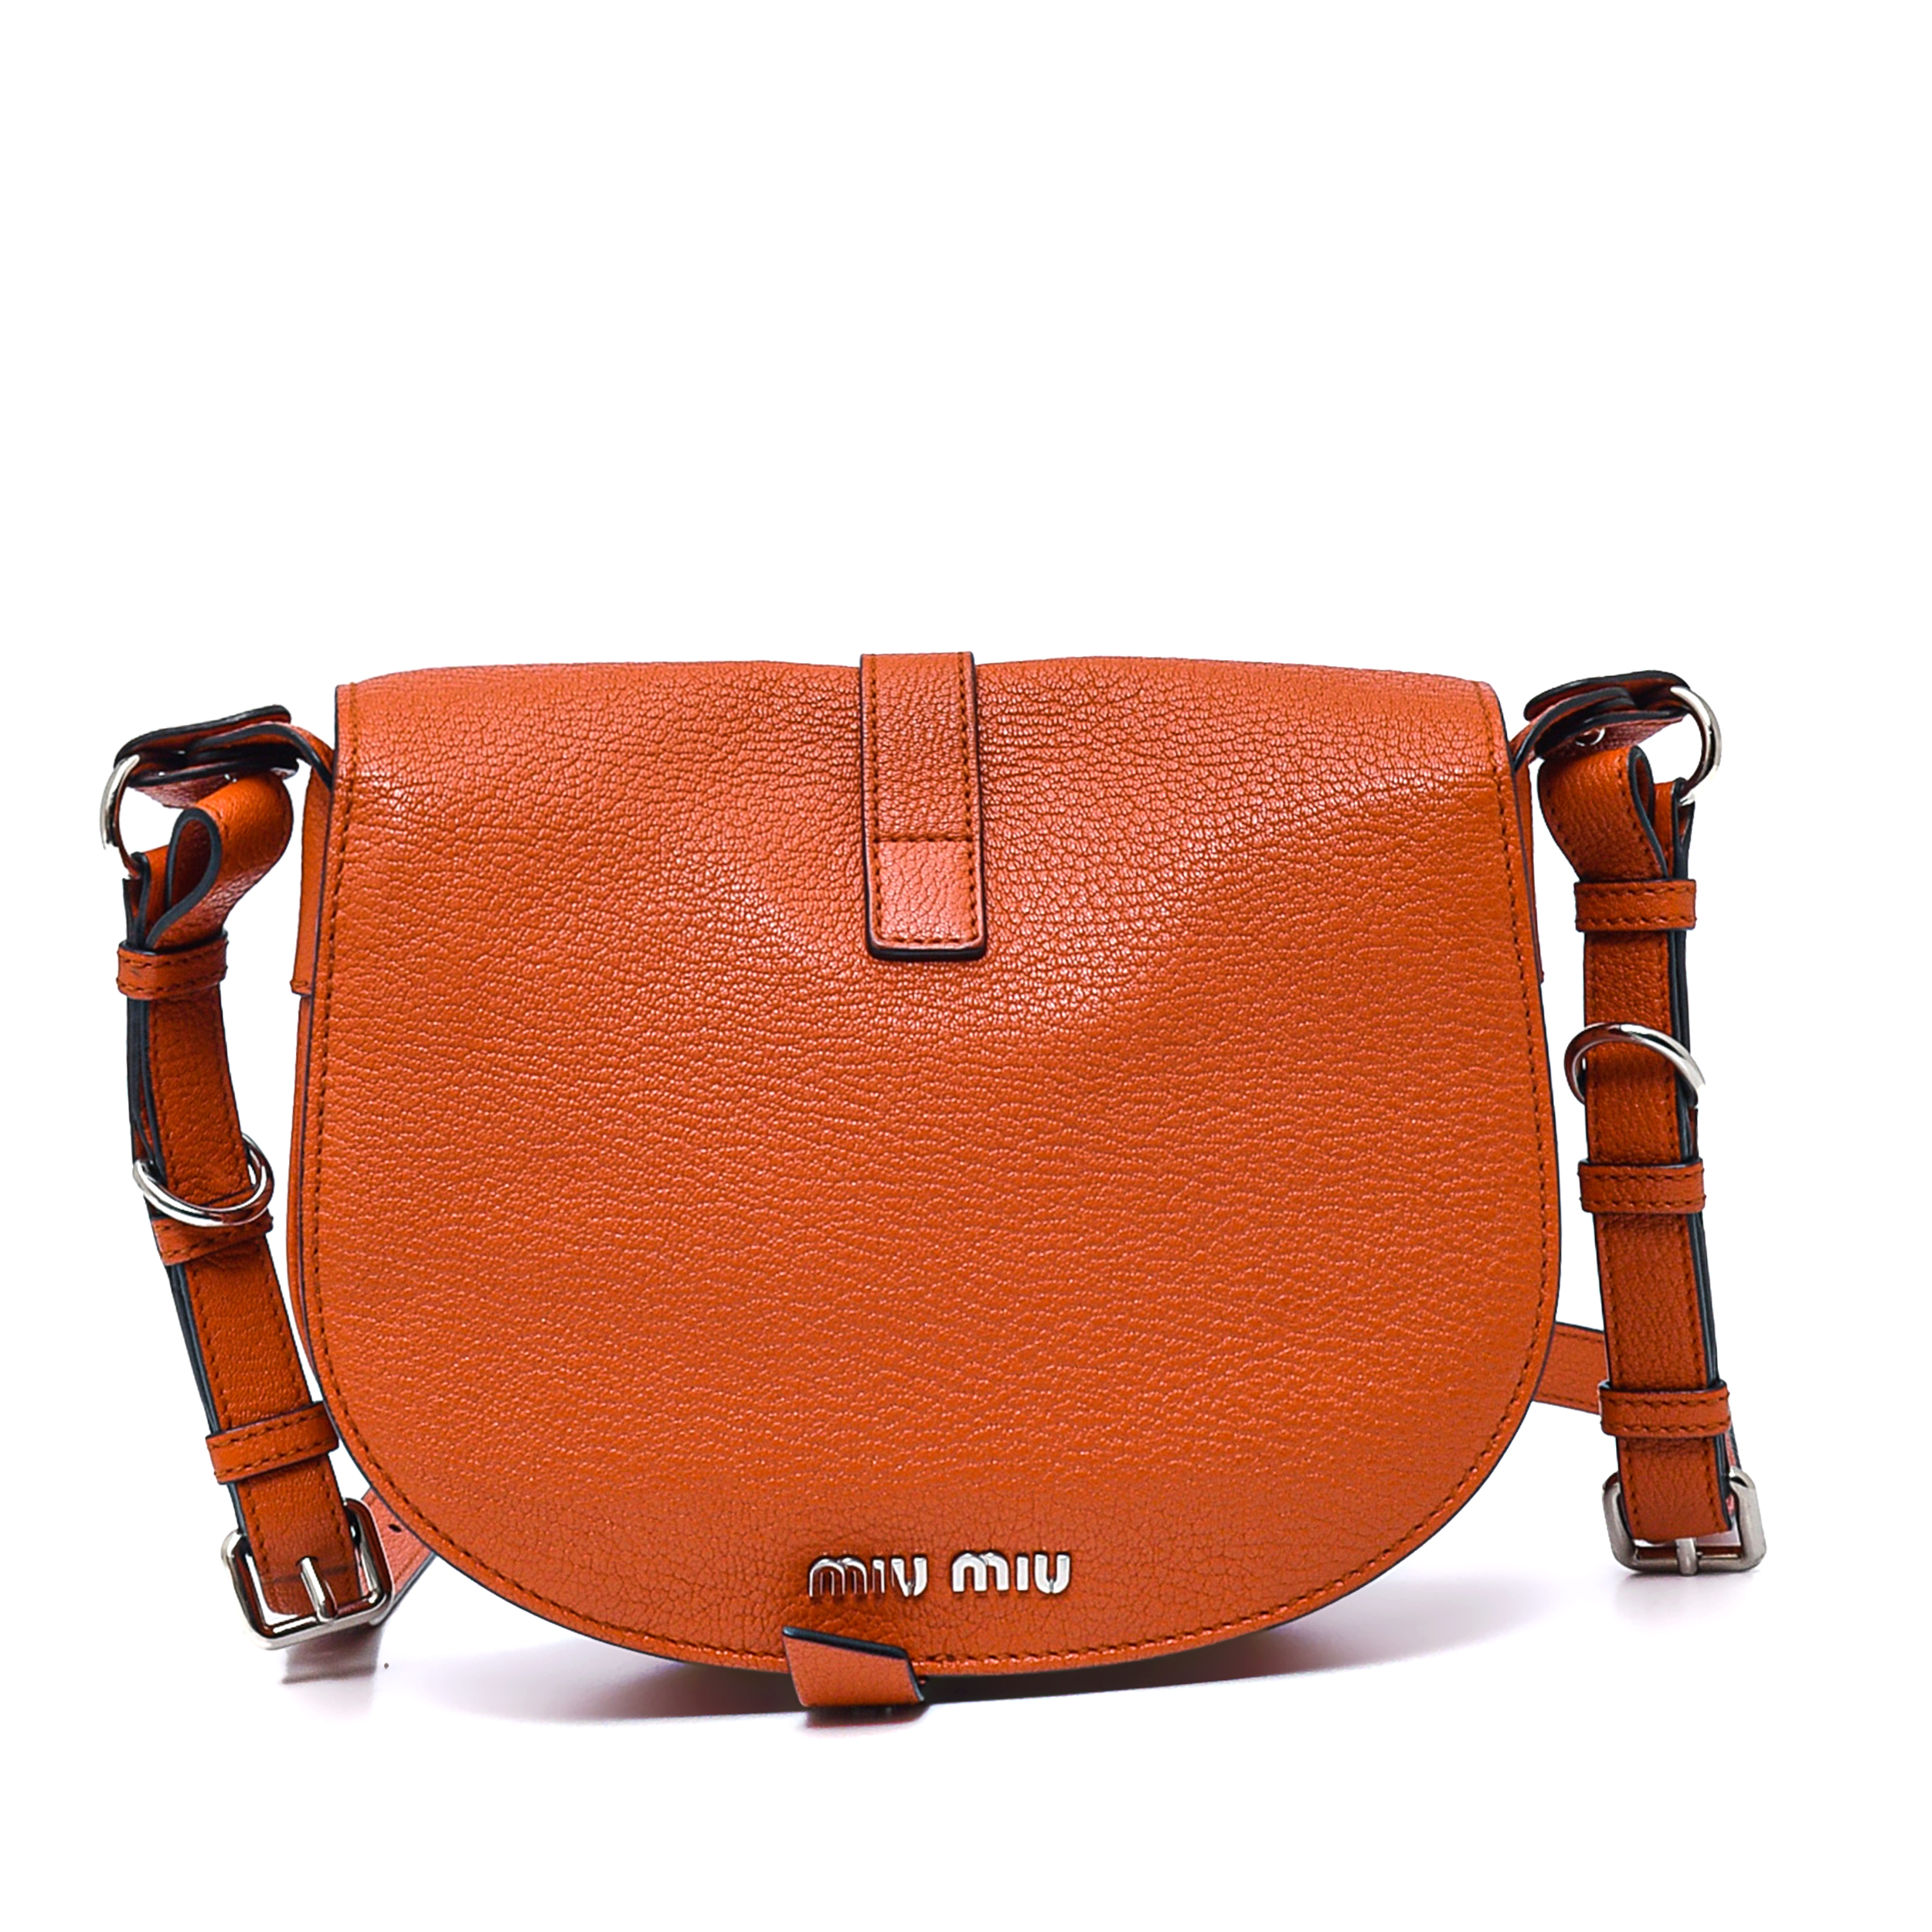 Miu Miu - Orange Leather Madras Crossbody Bag